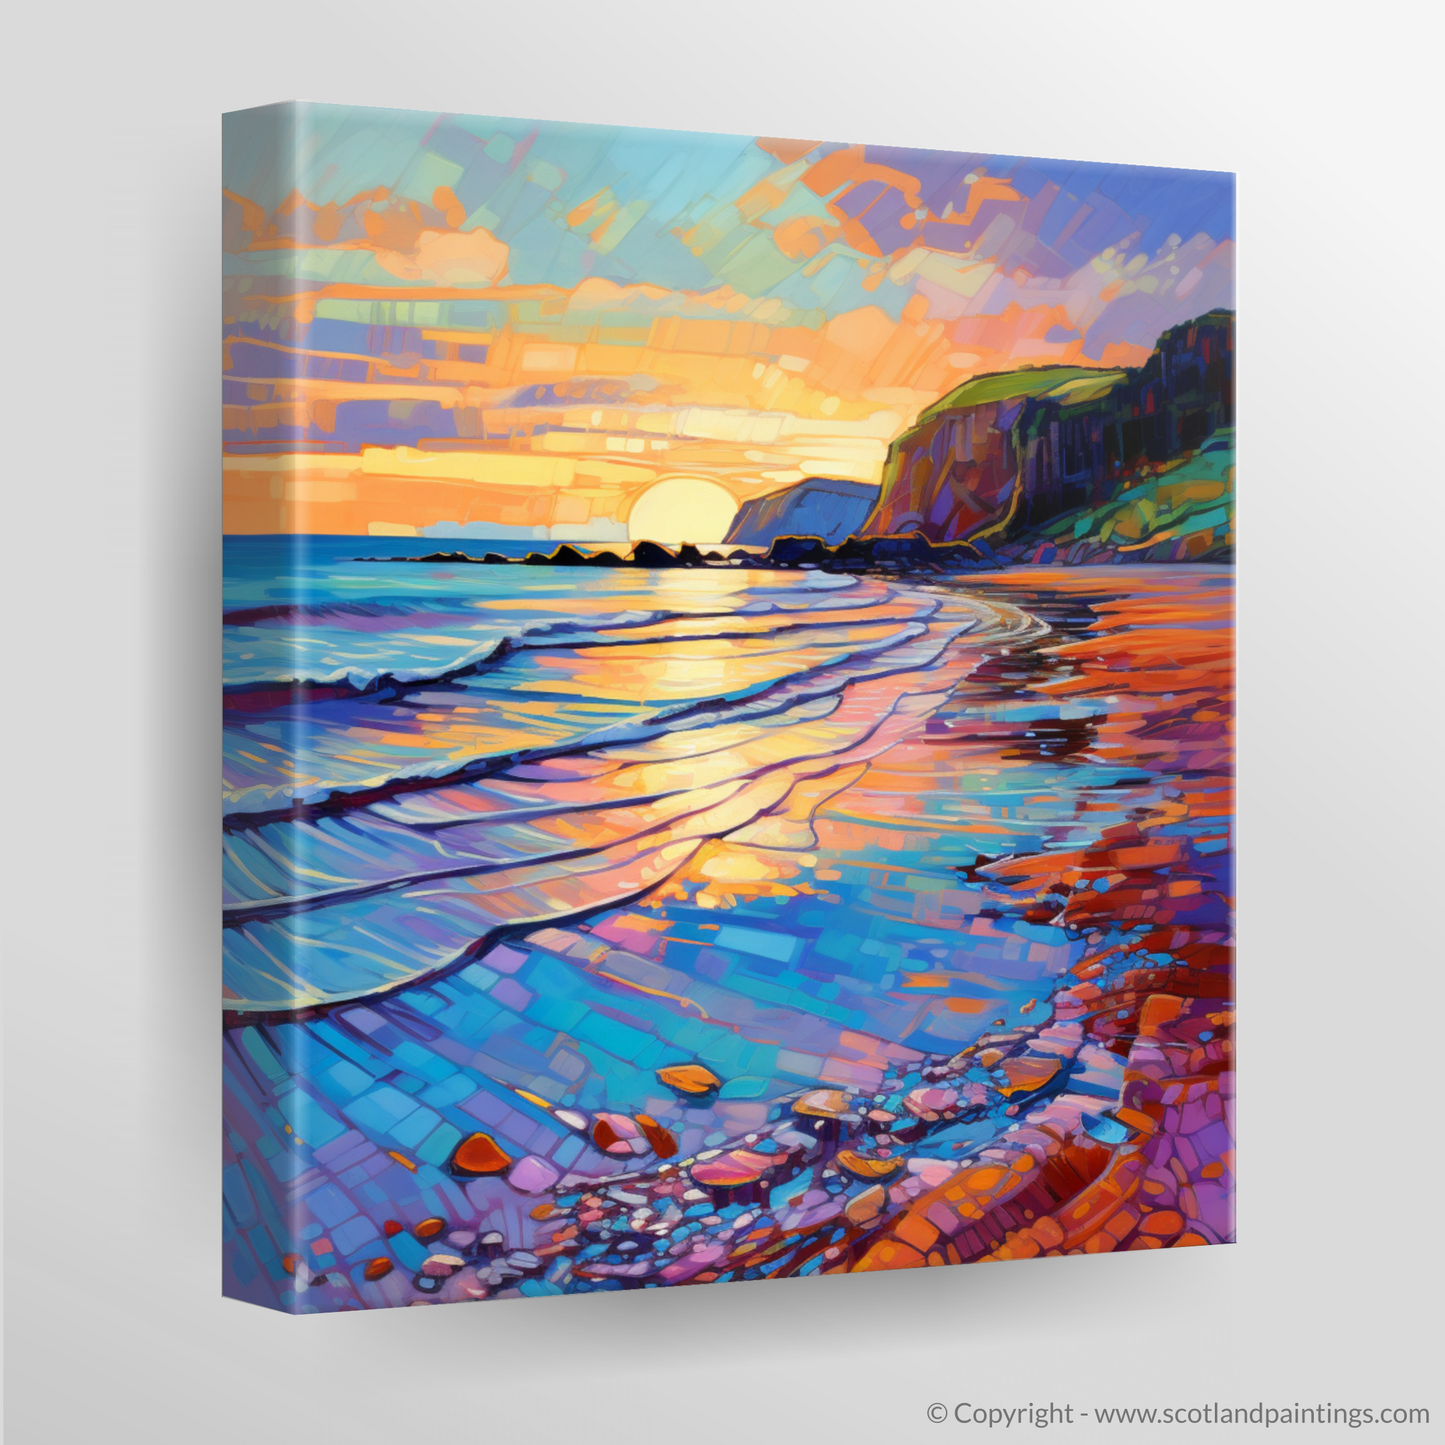 Catterline Bay Sunset: A Modern Impressionist Ode to Scottish Coves